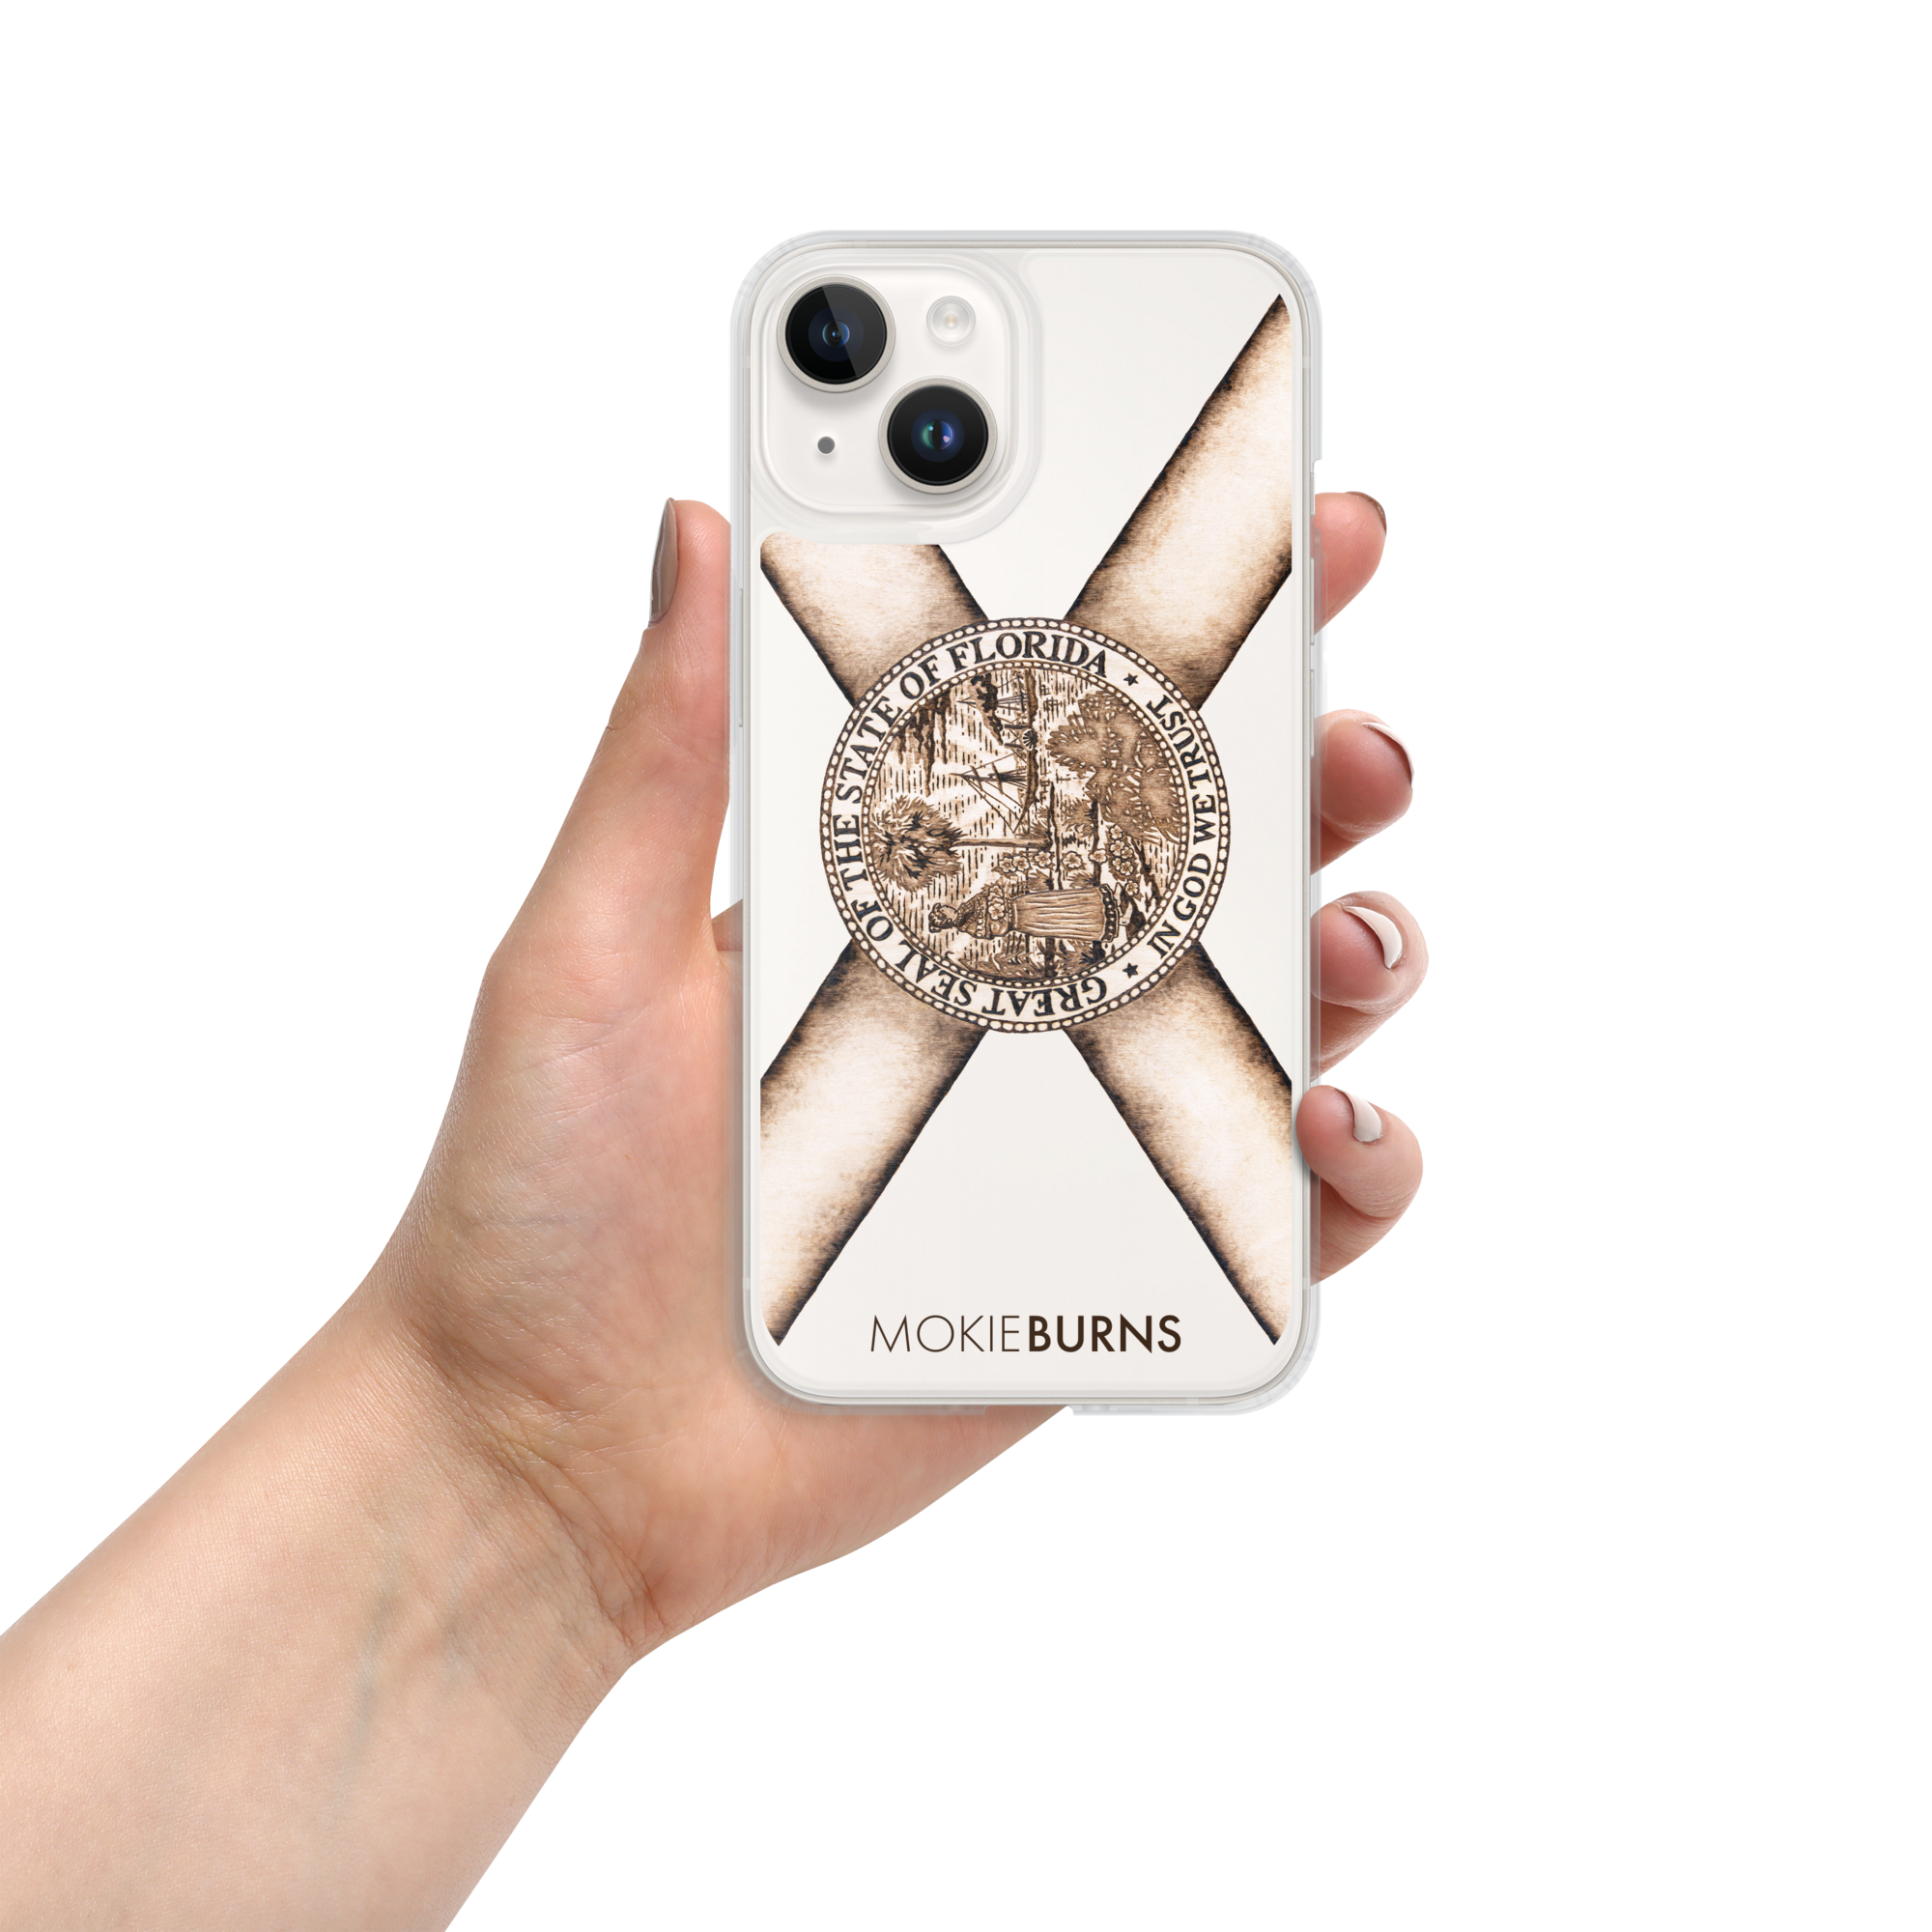 Louis Vuitton Lake iPhone SE (2020) Clear Case